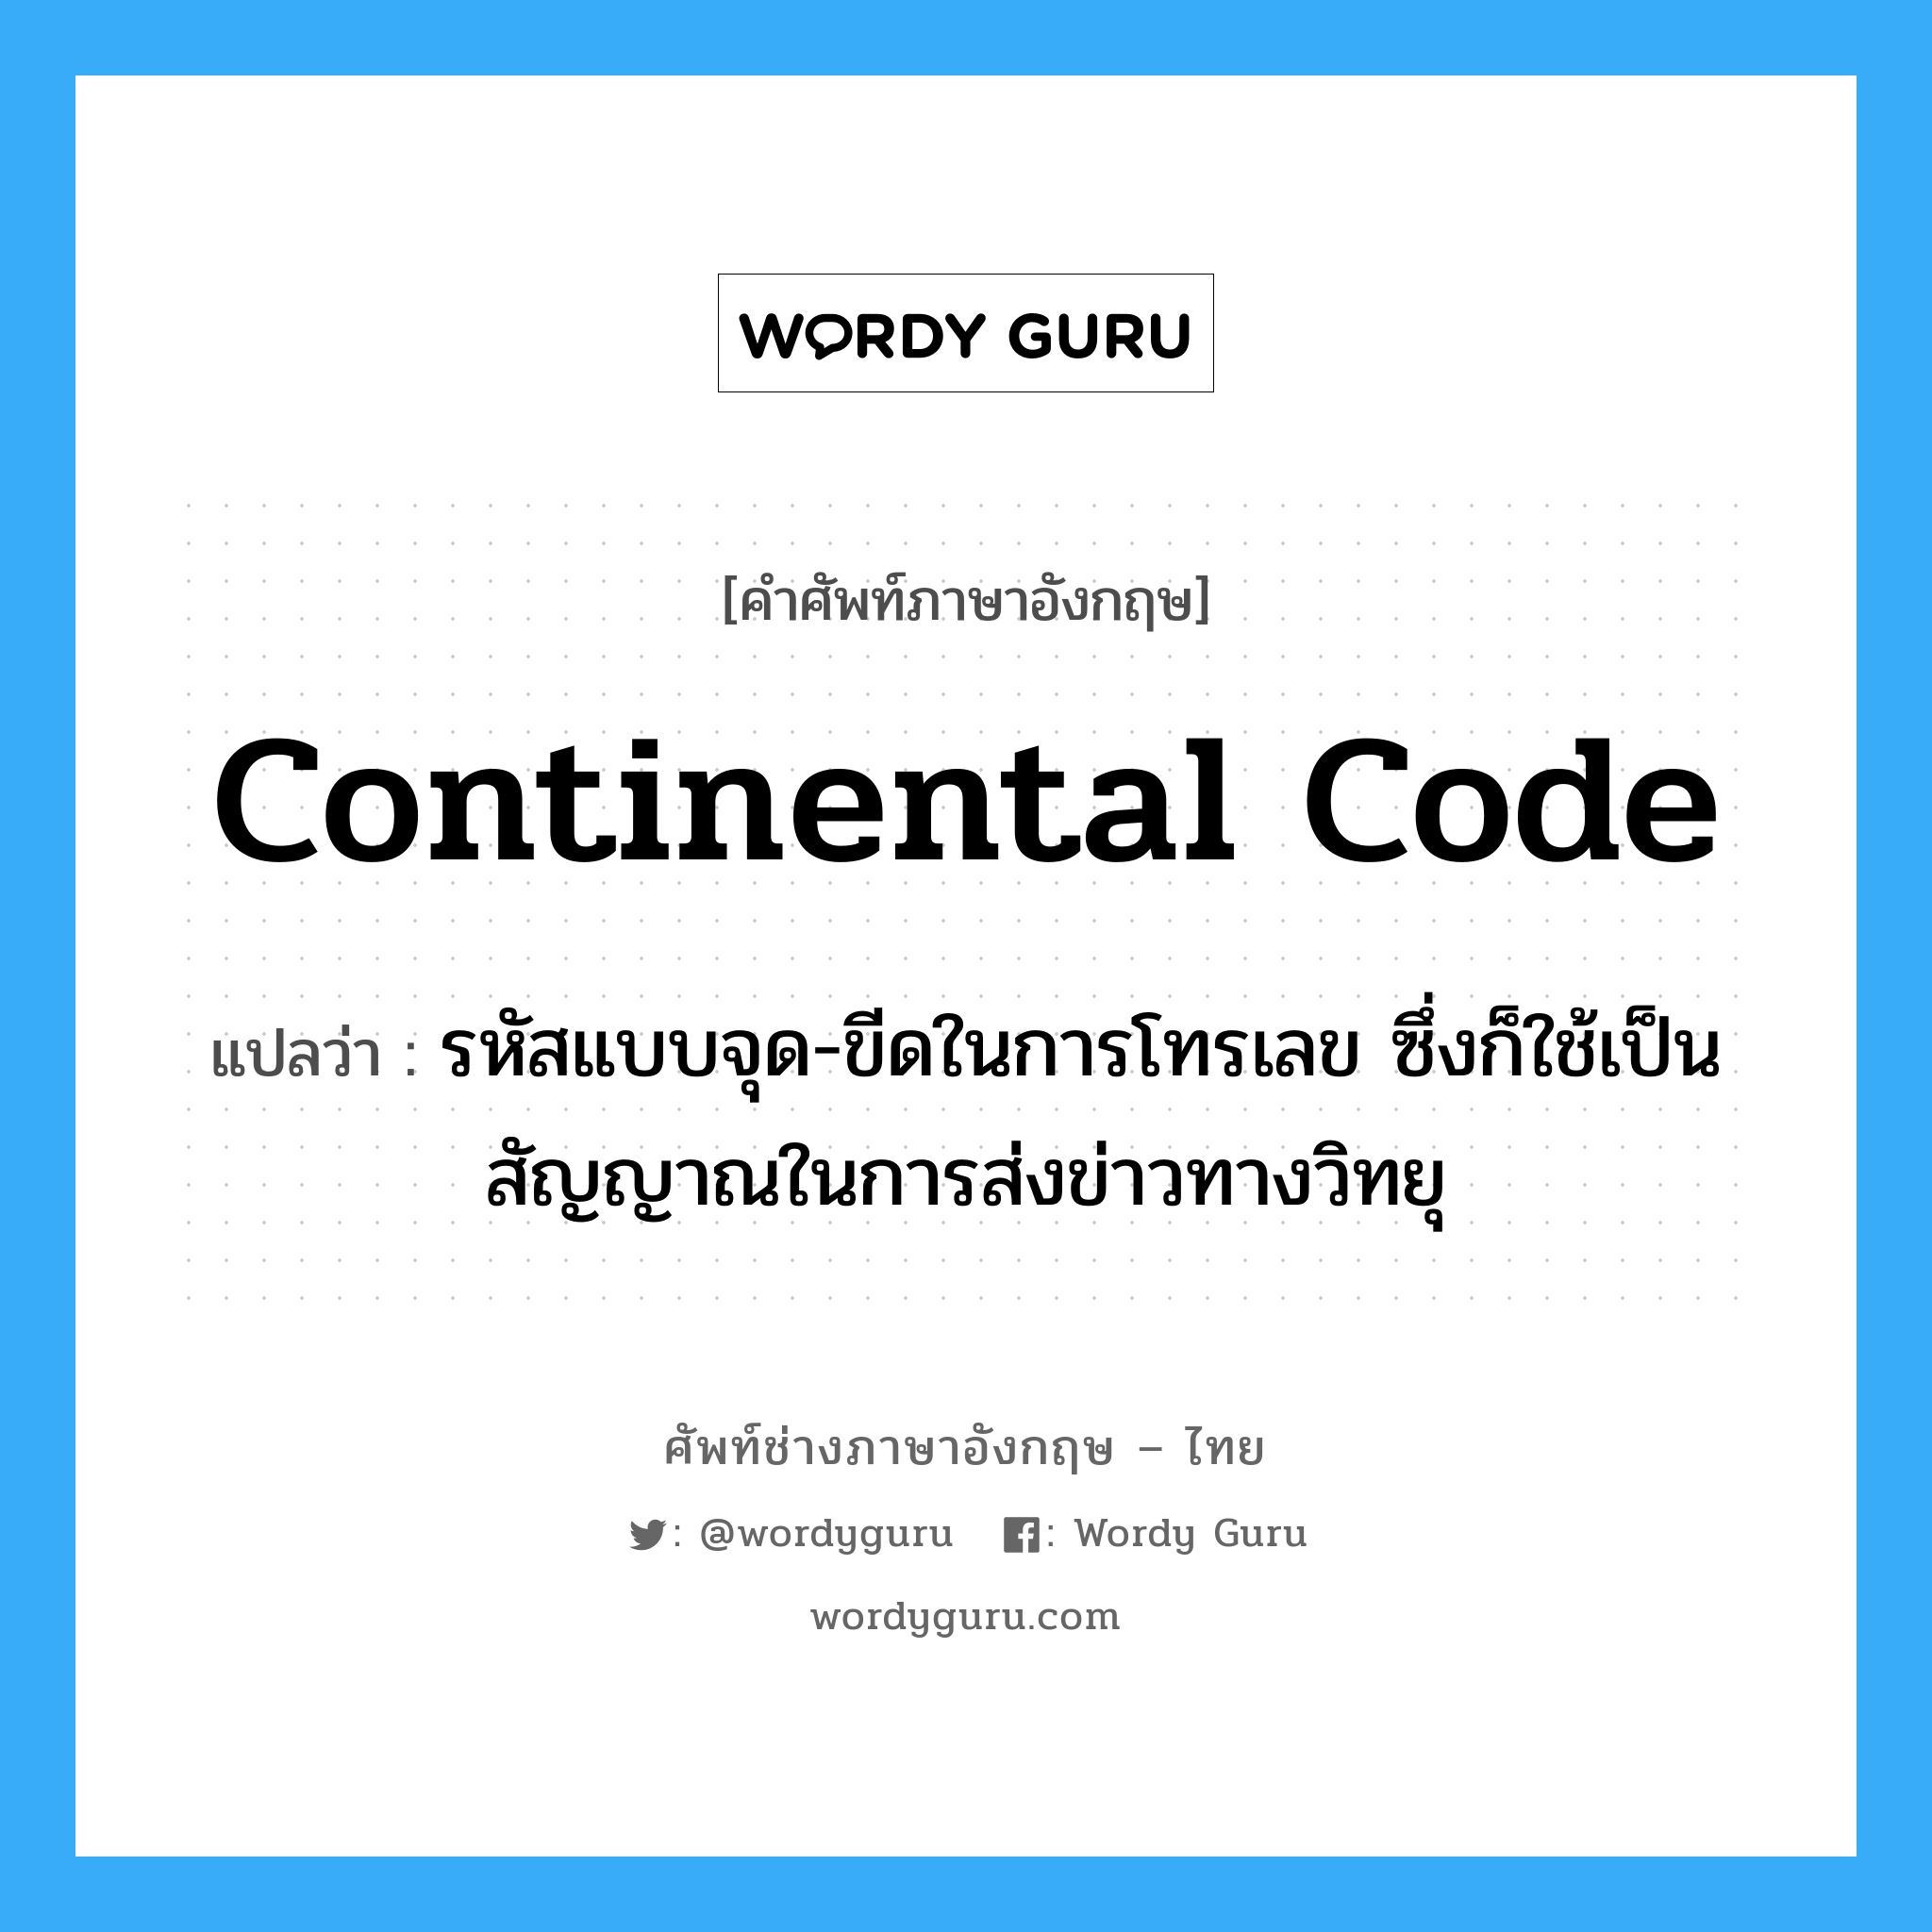 continental code แปลว่า?, คำศัพท์ช่างภาษาอังกฤษ - ไทย continental code คำศัพท์ภาษาอังกฤษ continental code แปลว่า รหัสแบบจุด-ขีดในการโทรเลข ซึ่งก็ใช้เป็นสัญญาณในการส่งข่าวทางวิทยุ